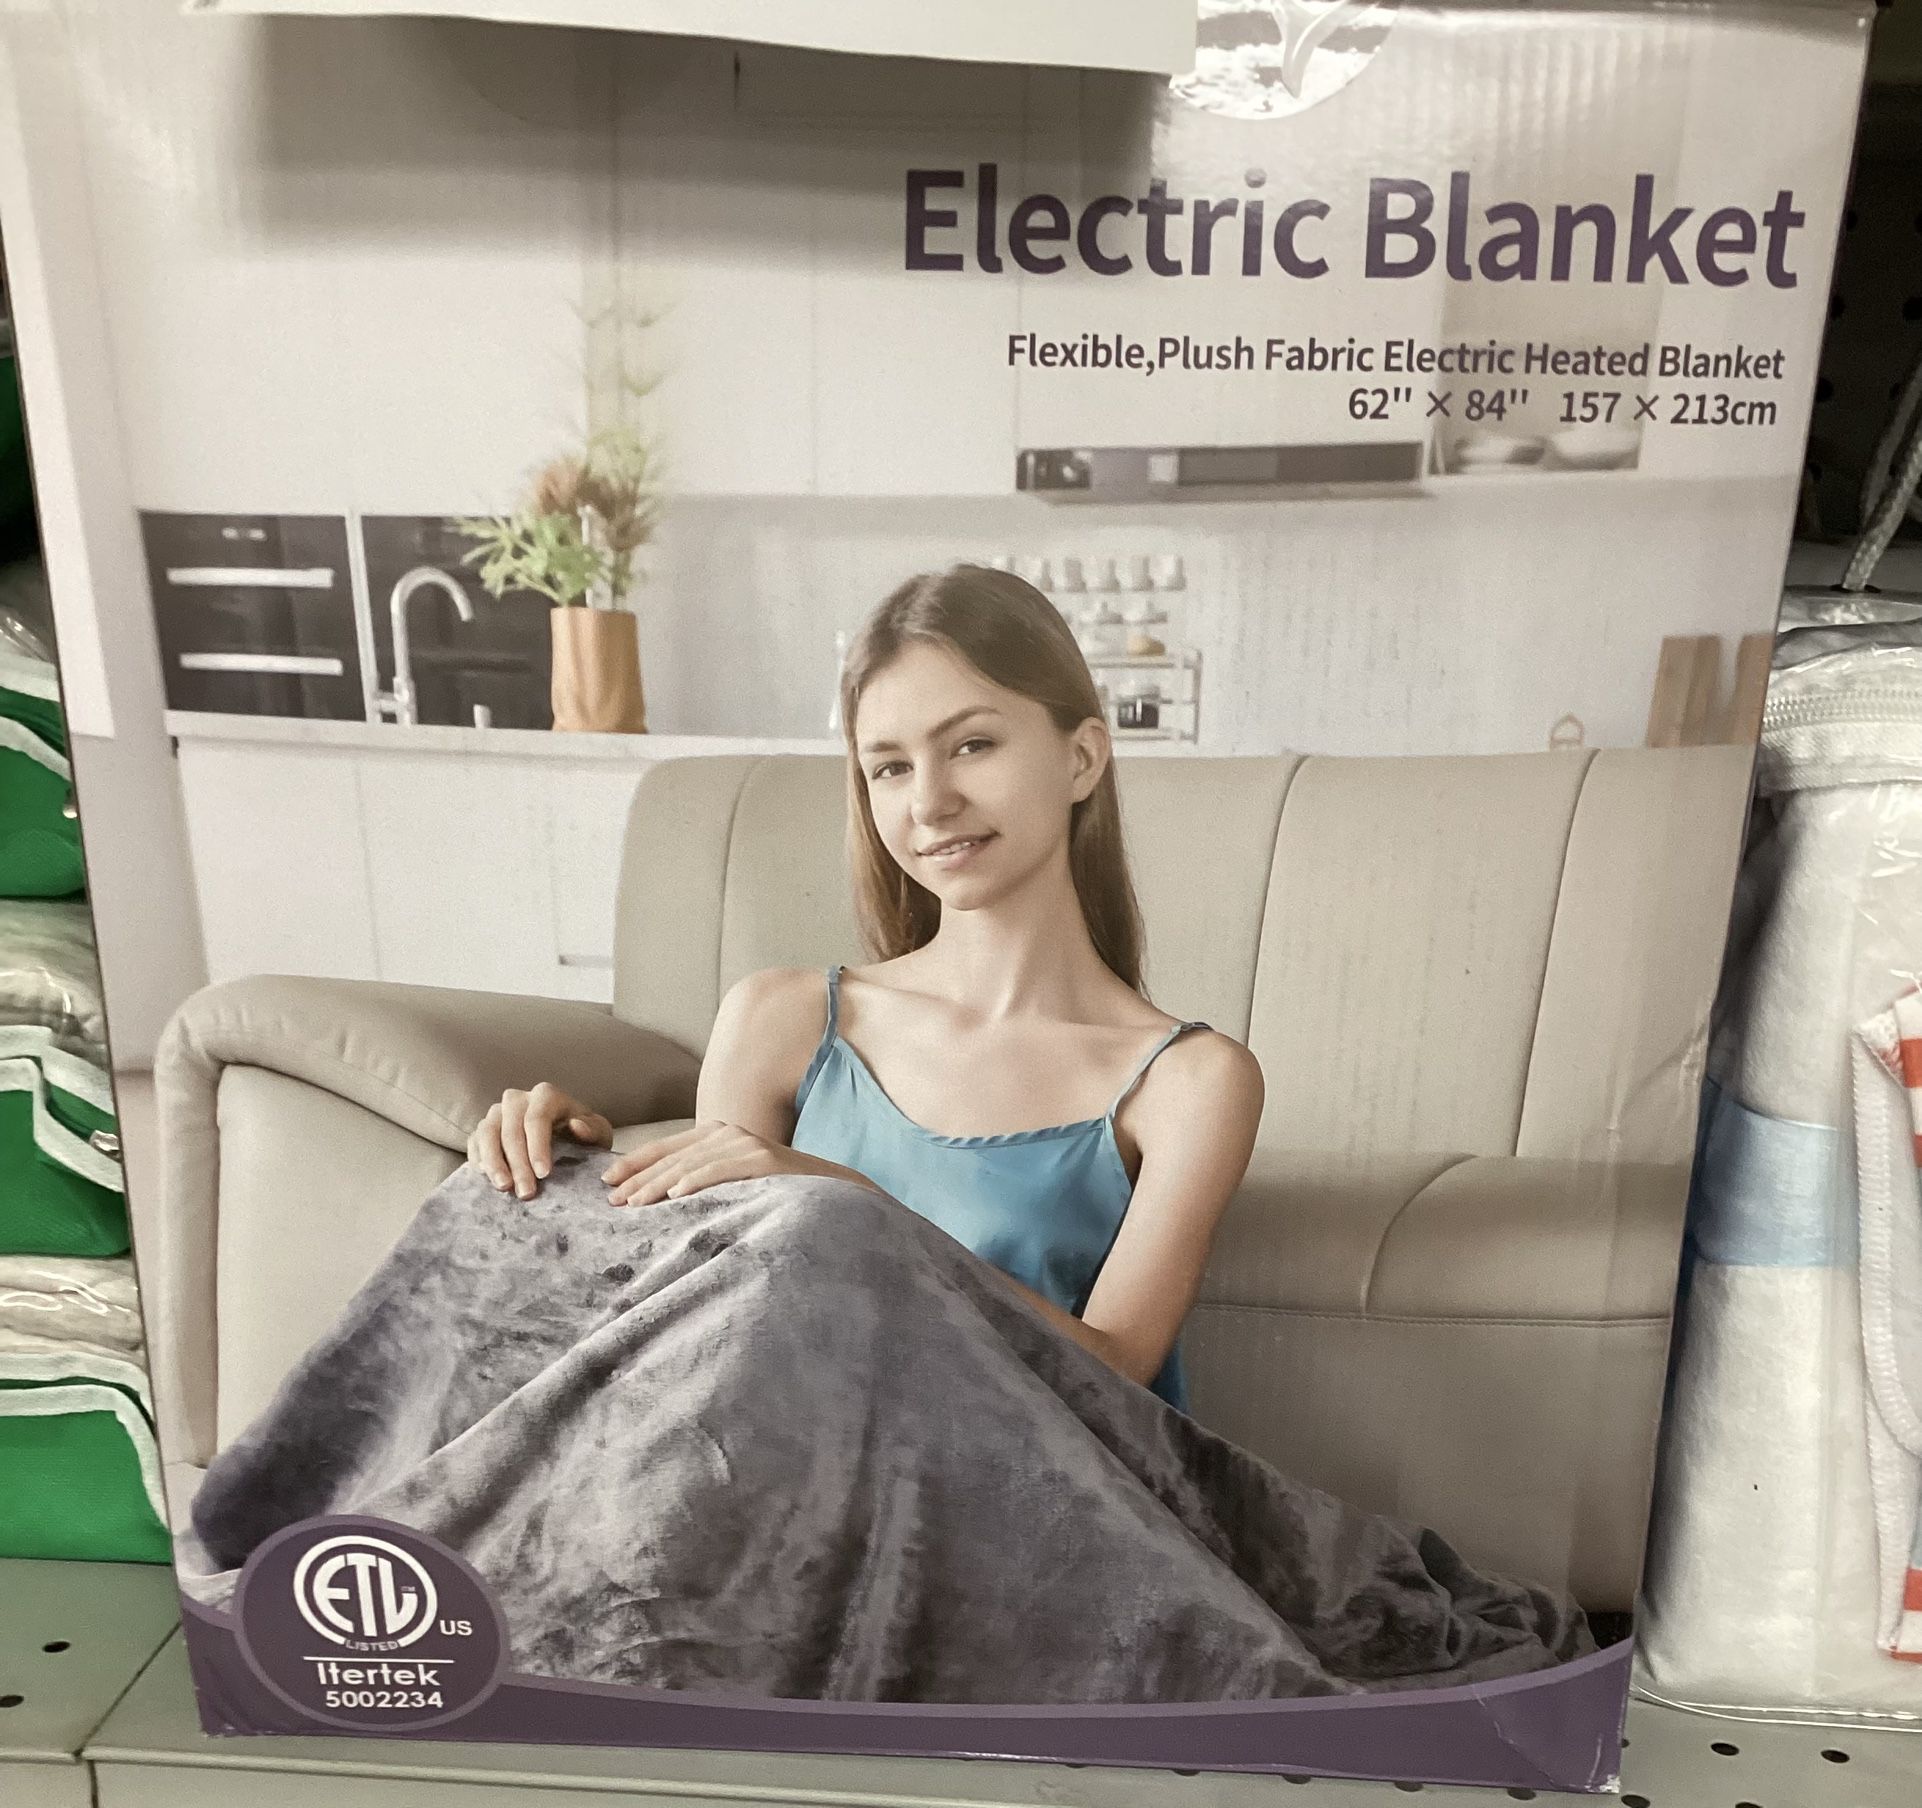 Electric Blanket 